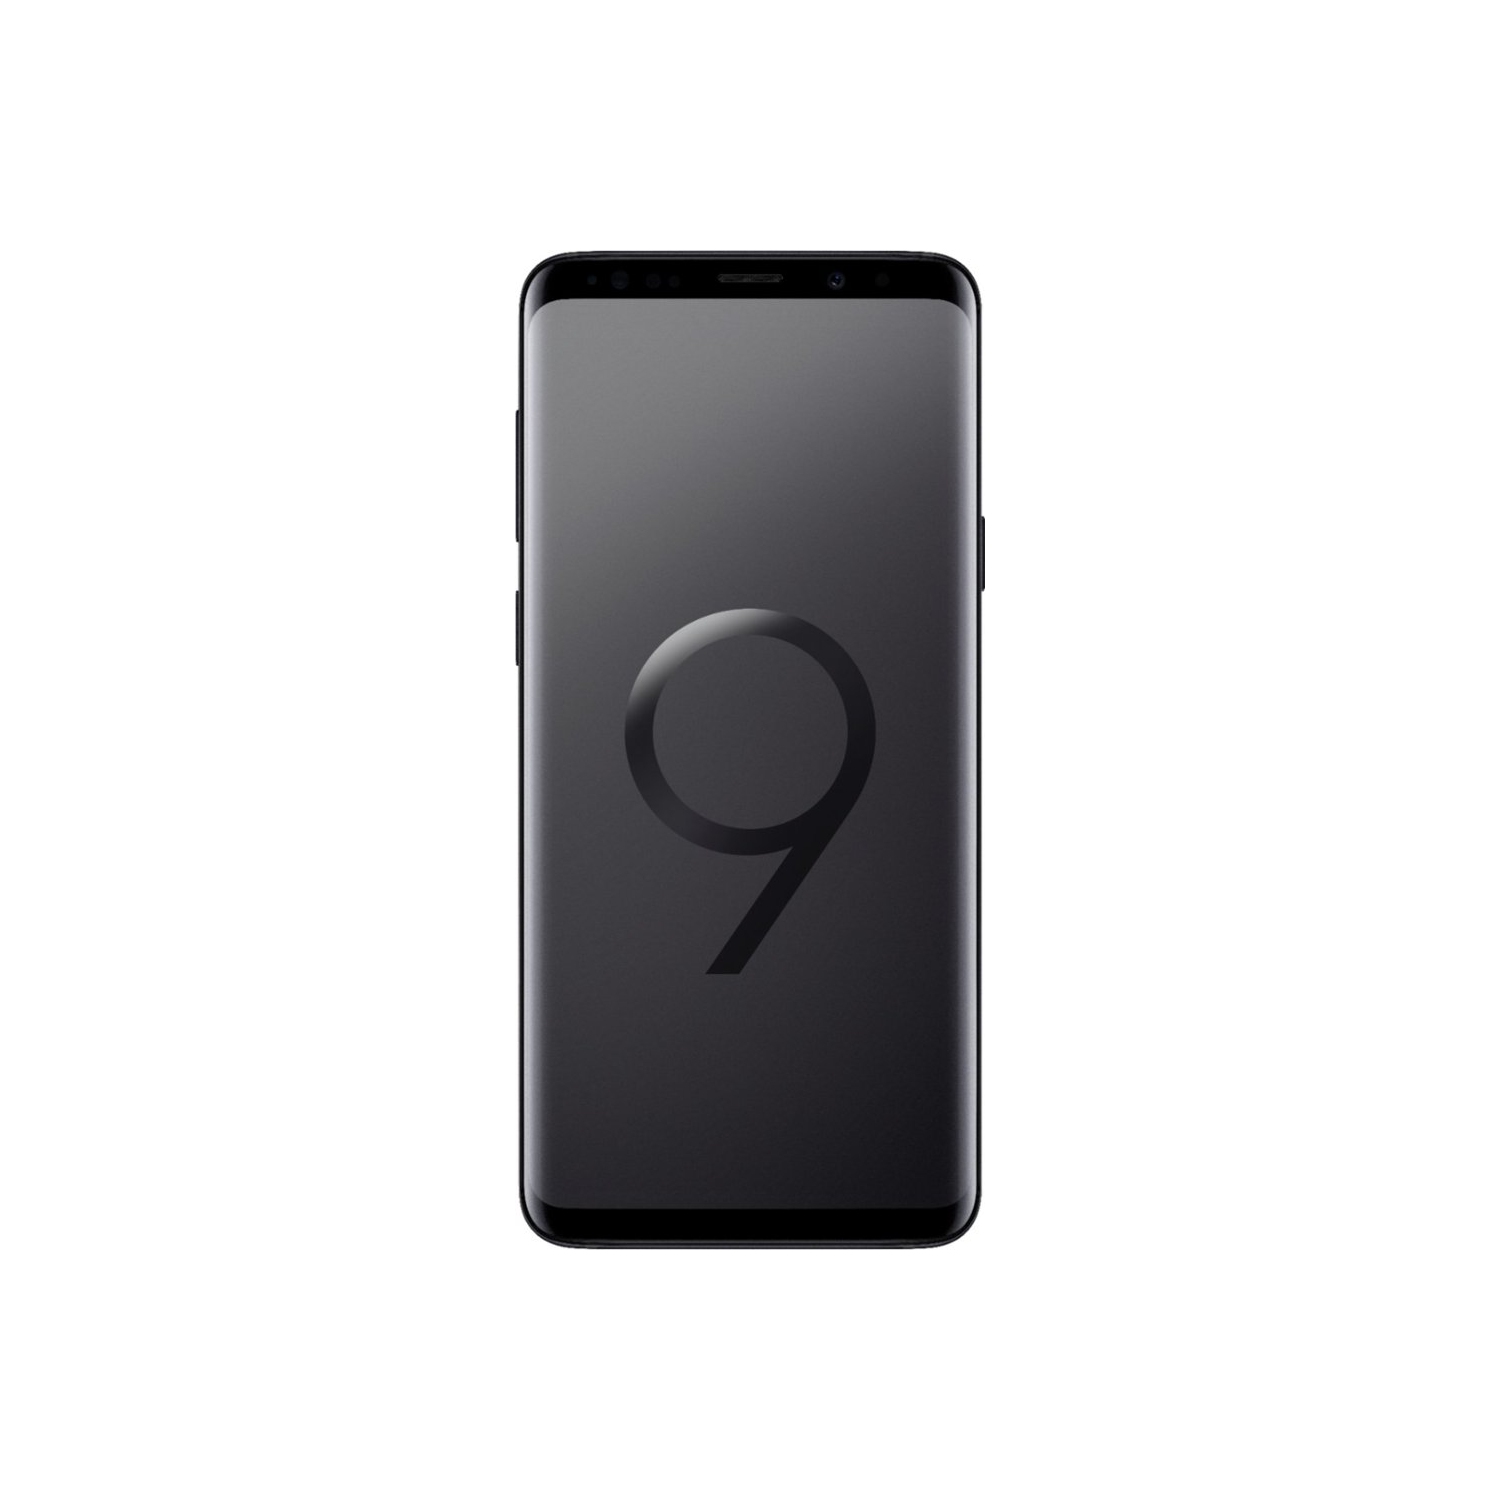 Refurbished (Excellent) - Samsung Galaxy S9+ 64GB Smartphone - Midnight Black - Unlocked - Certified Refurbished